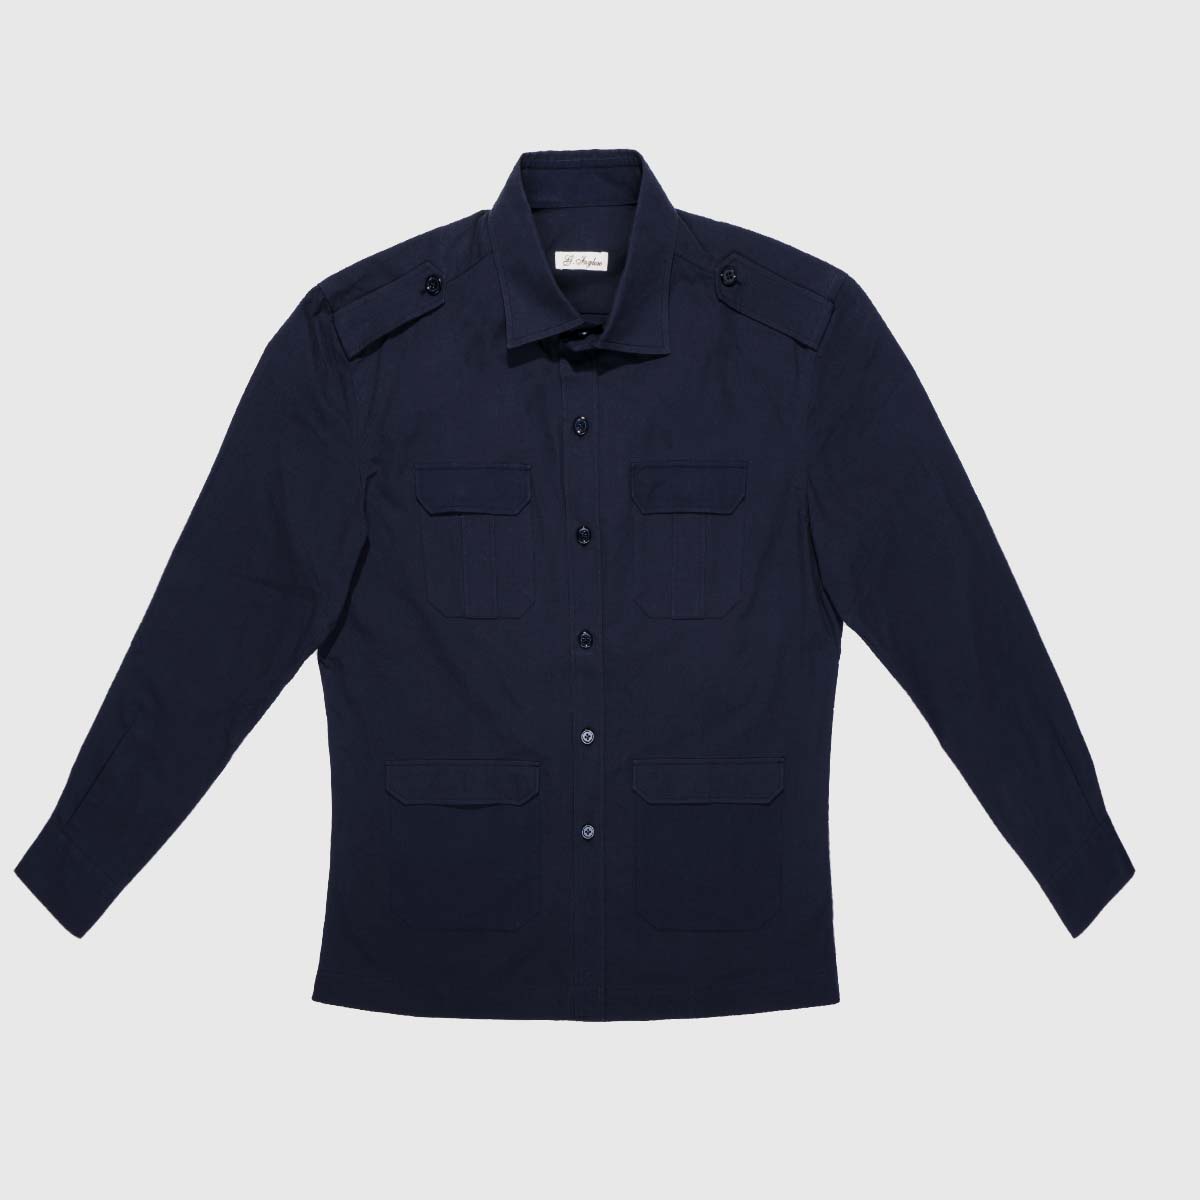 Cotton Overshirt in Navy G. Inglese on sale 2022